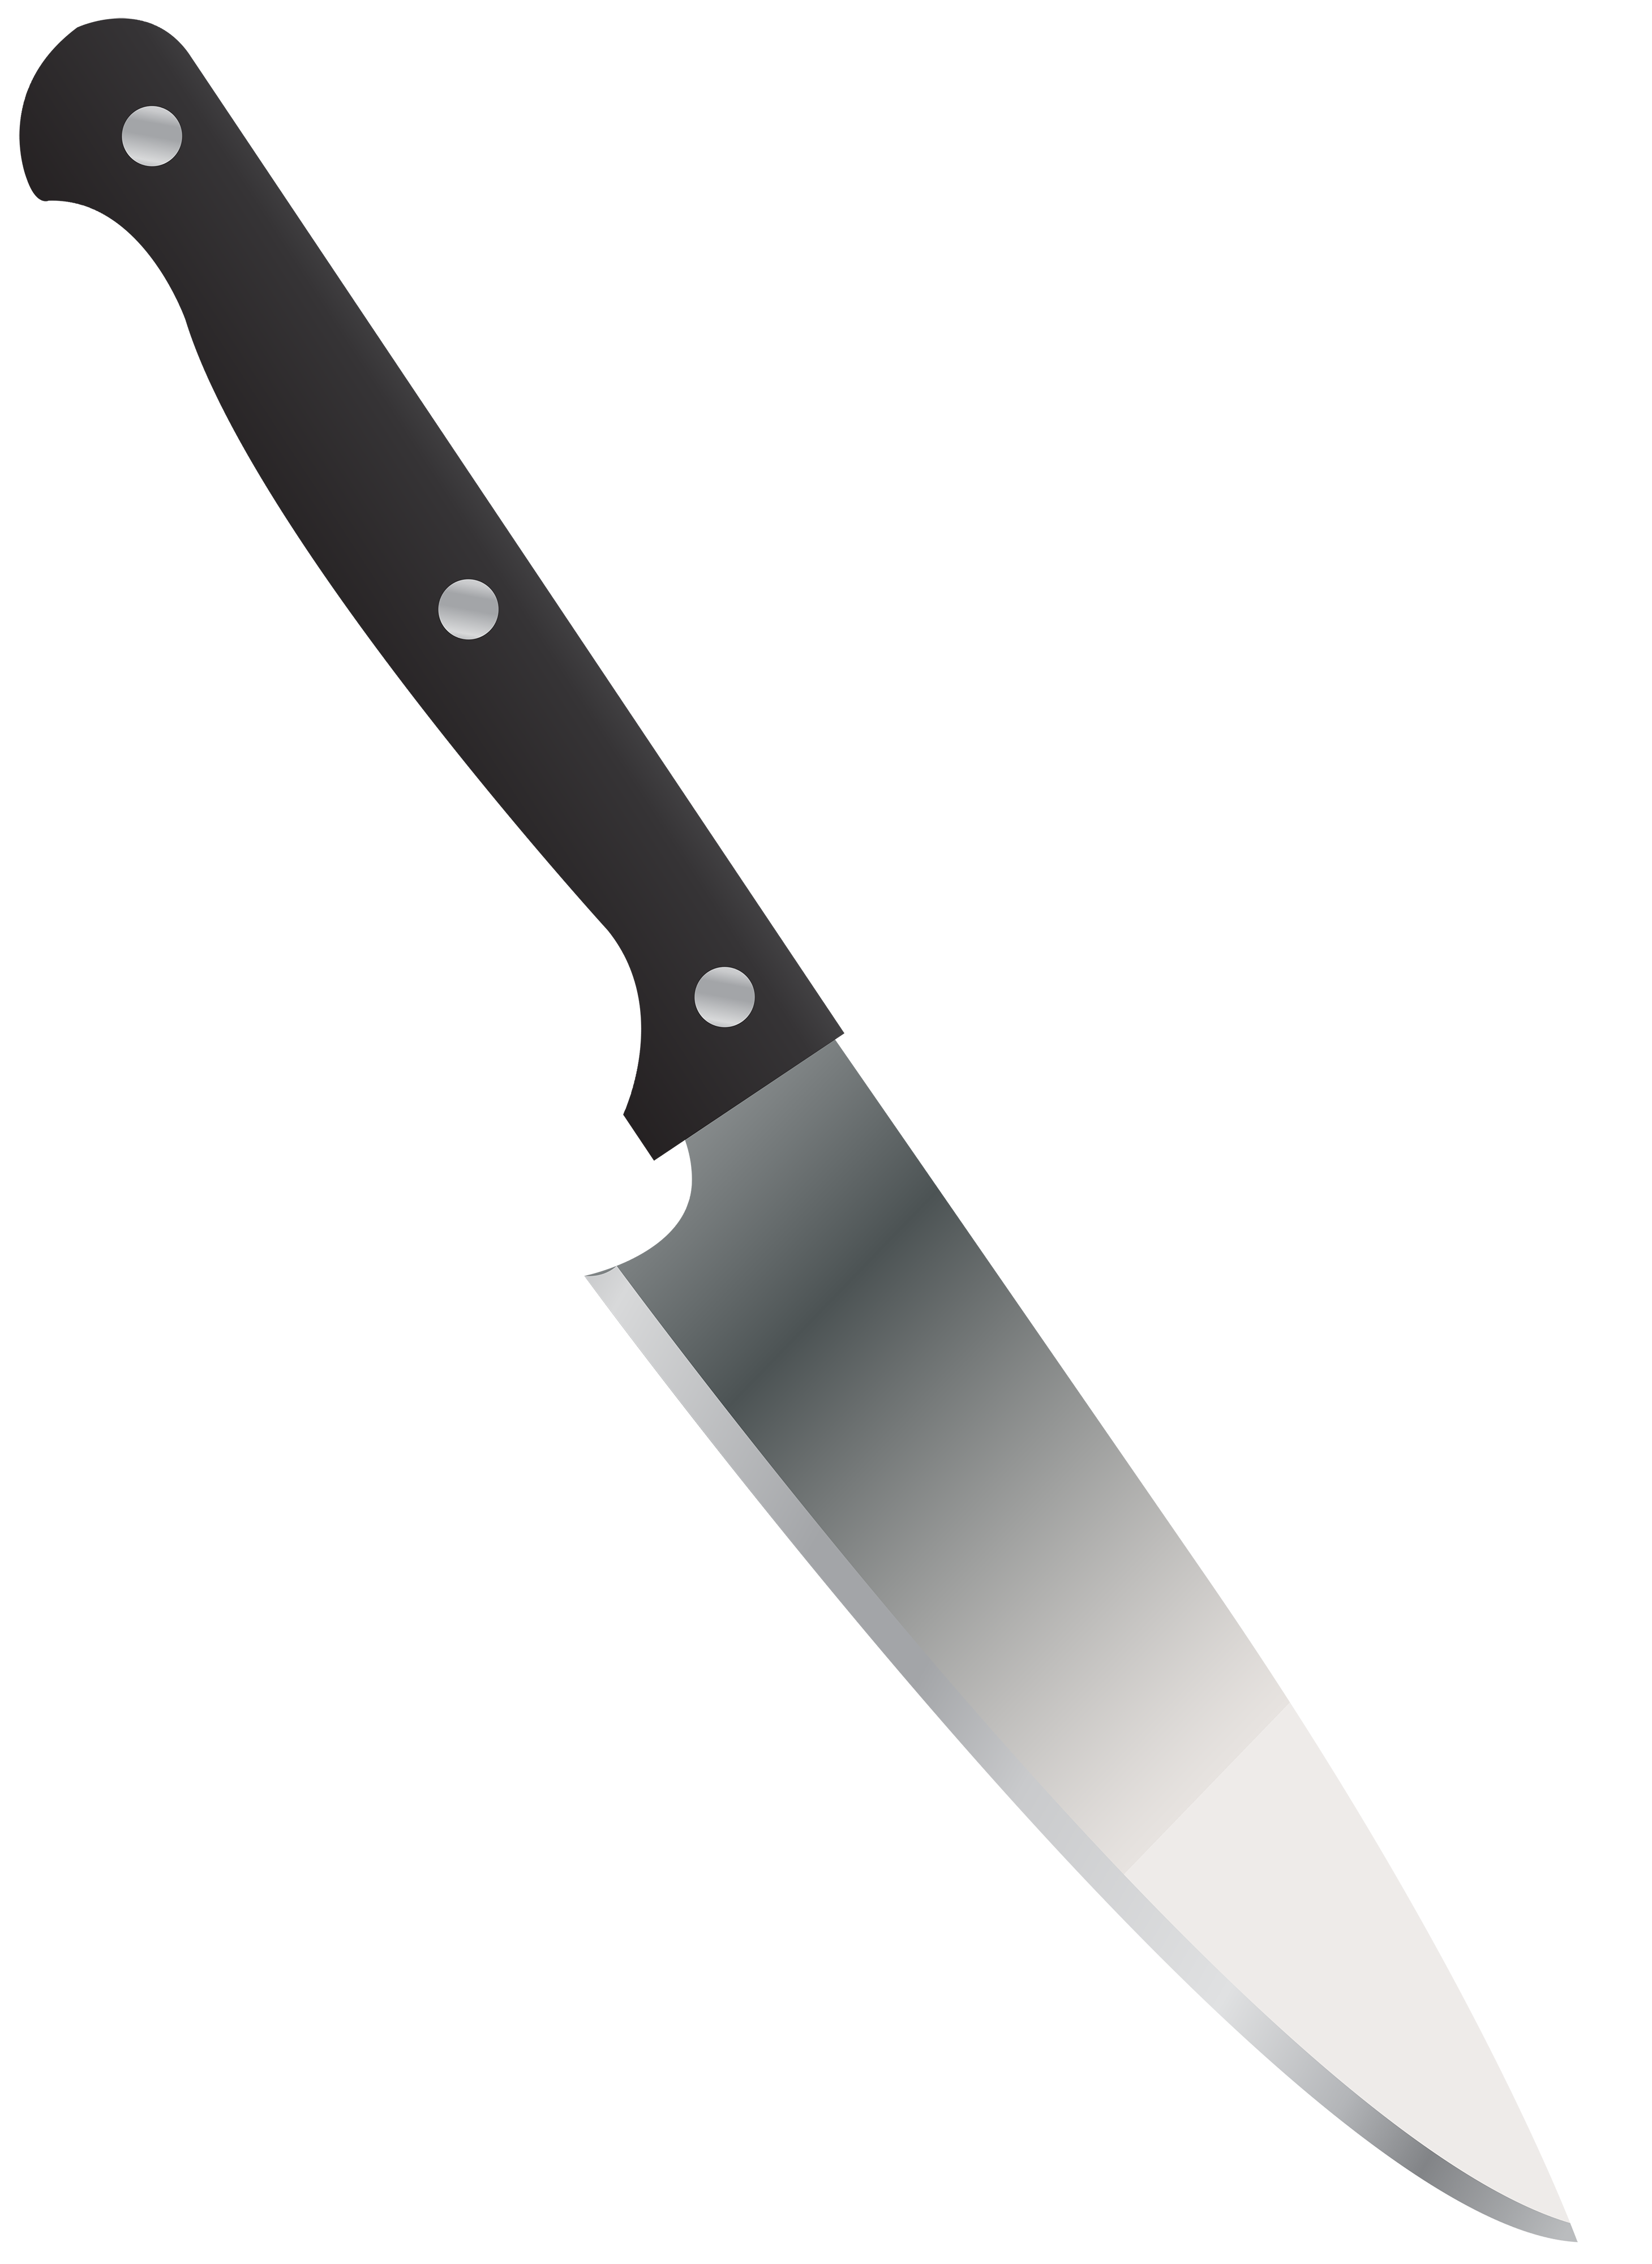 Clipart kitchen monogram. Knife png image clip